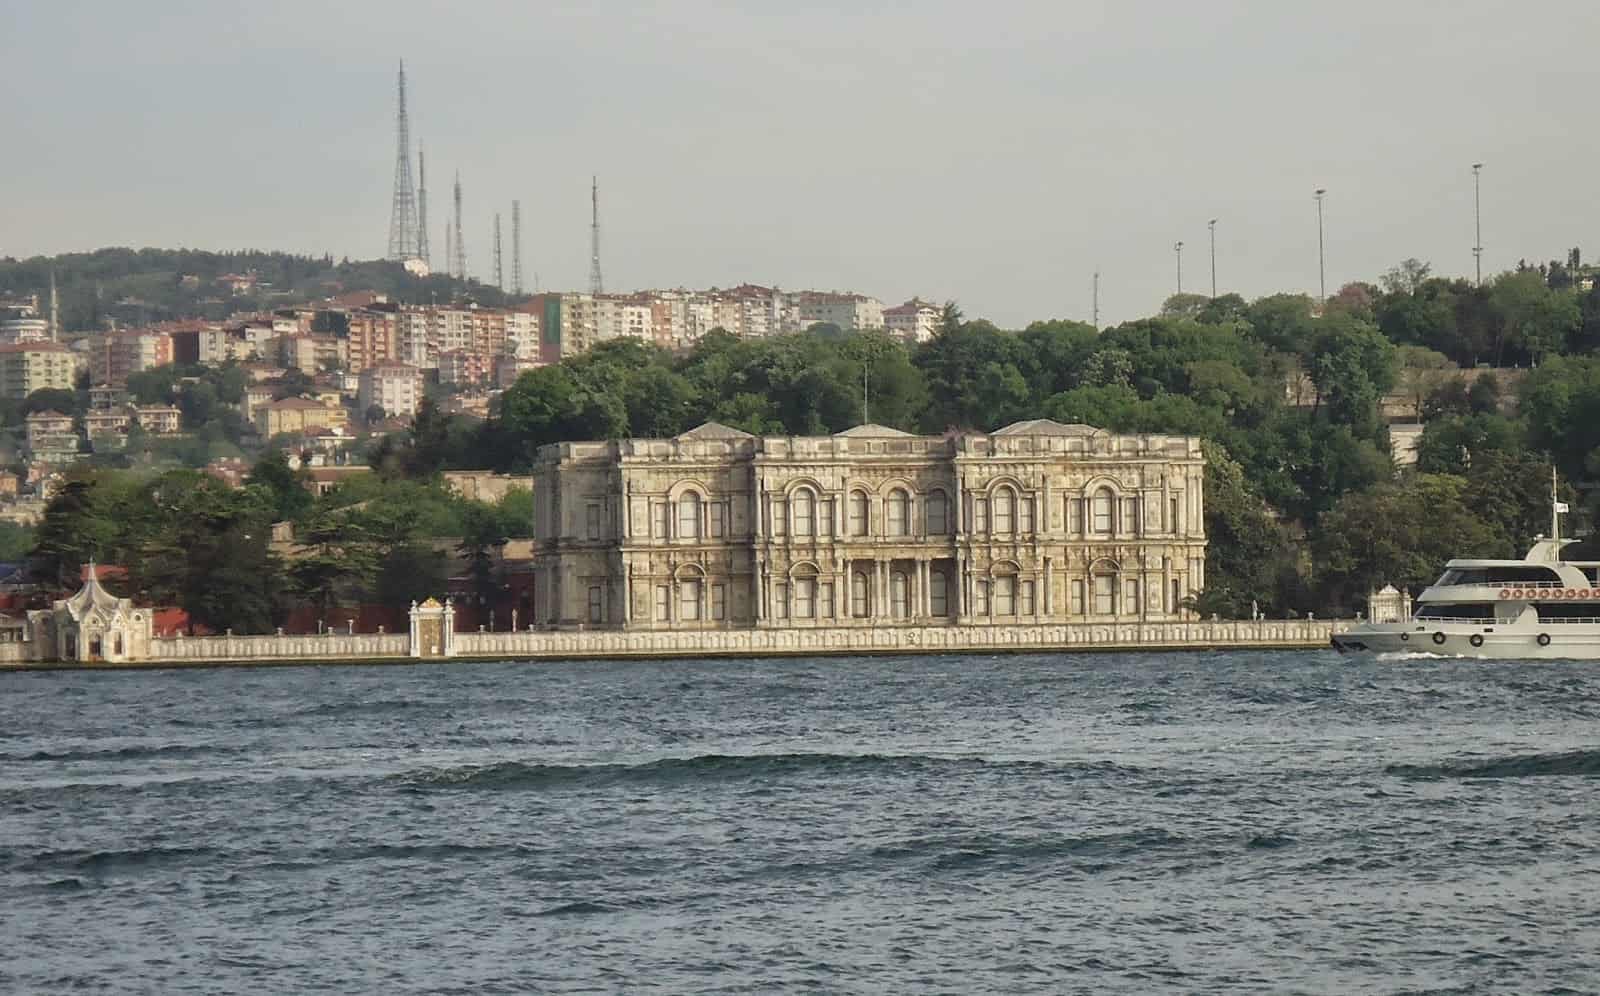 Beylerbeyi Palace in Beylerbeyi, Istanbul, Turkey